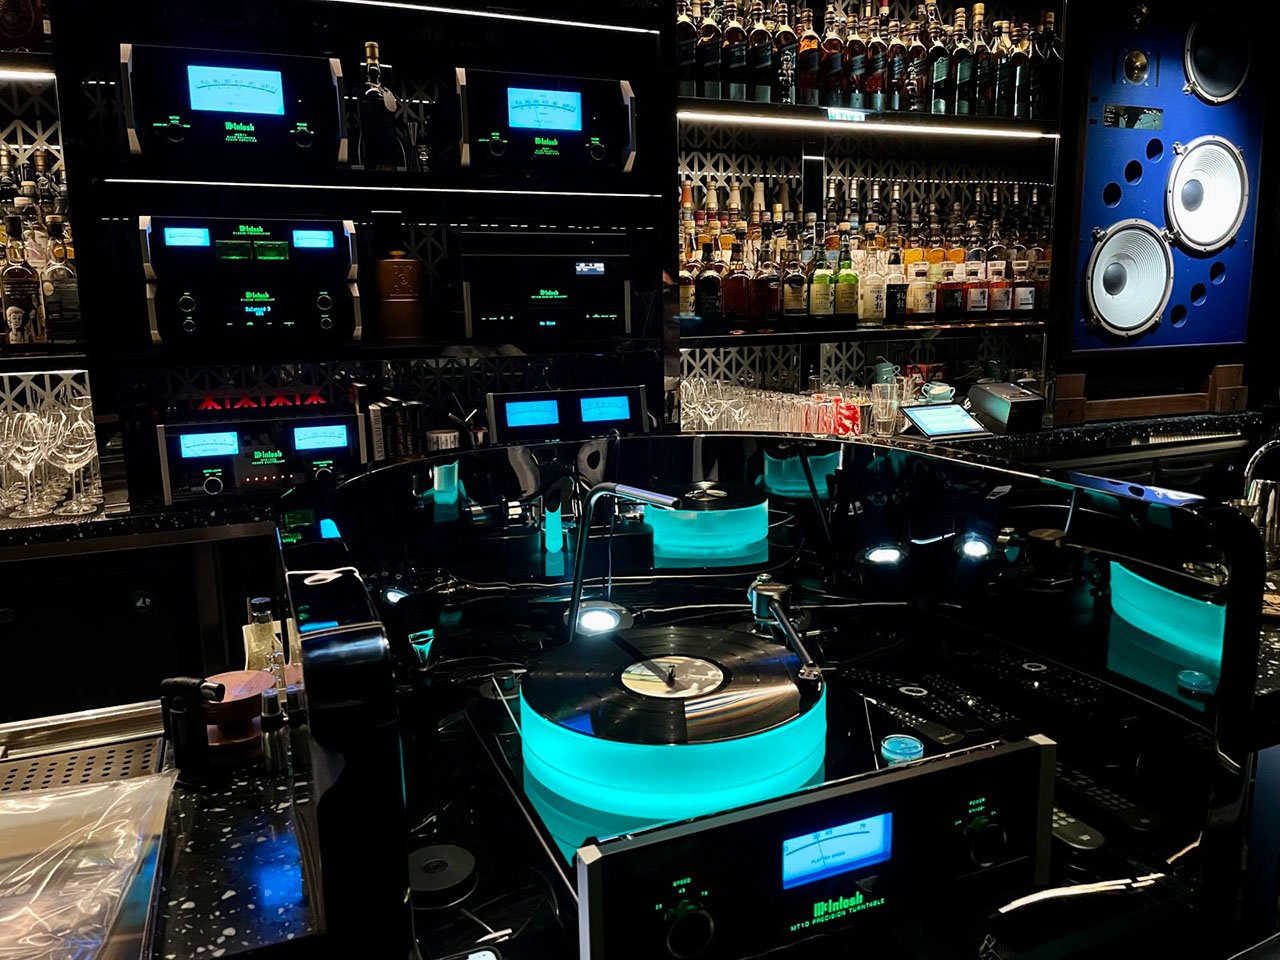 CNY Bar with McIntosh audio equipment